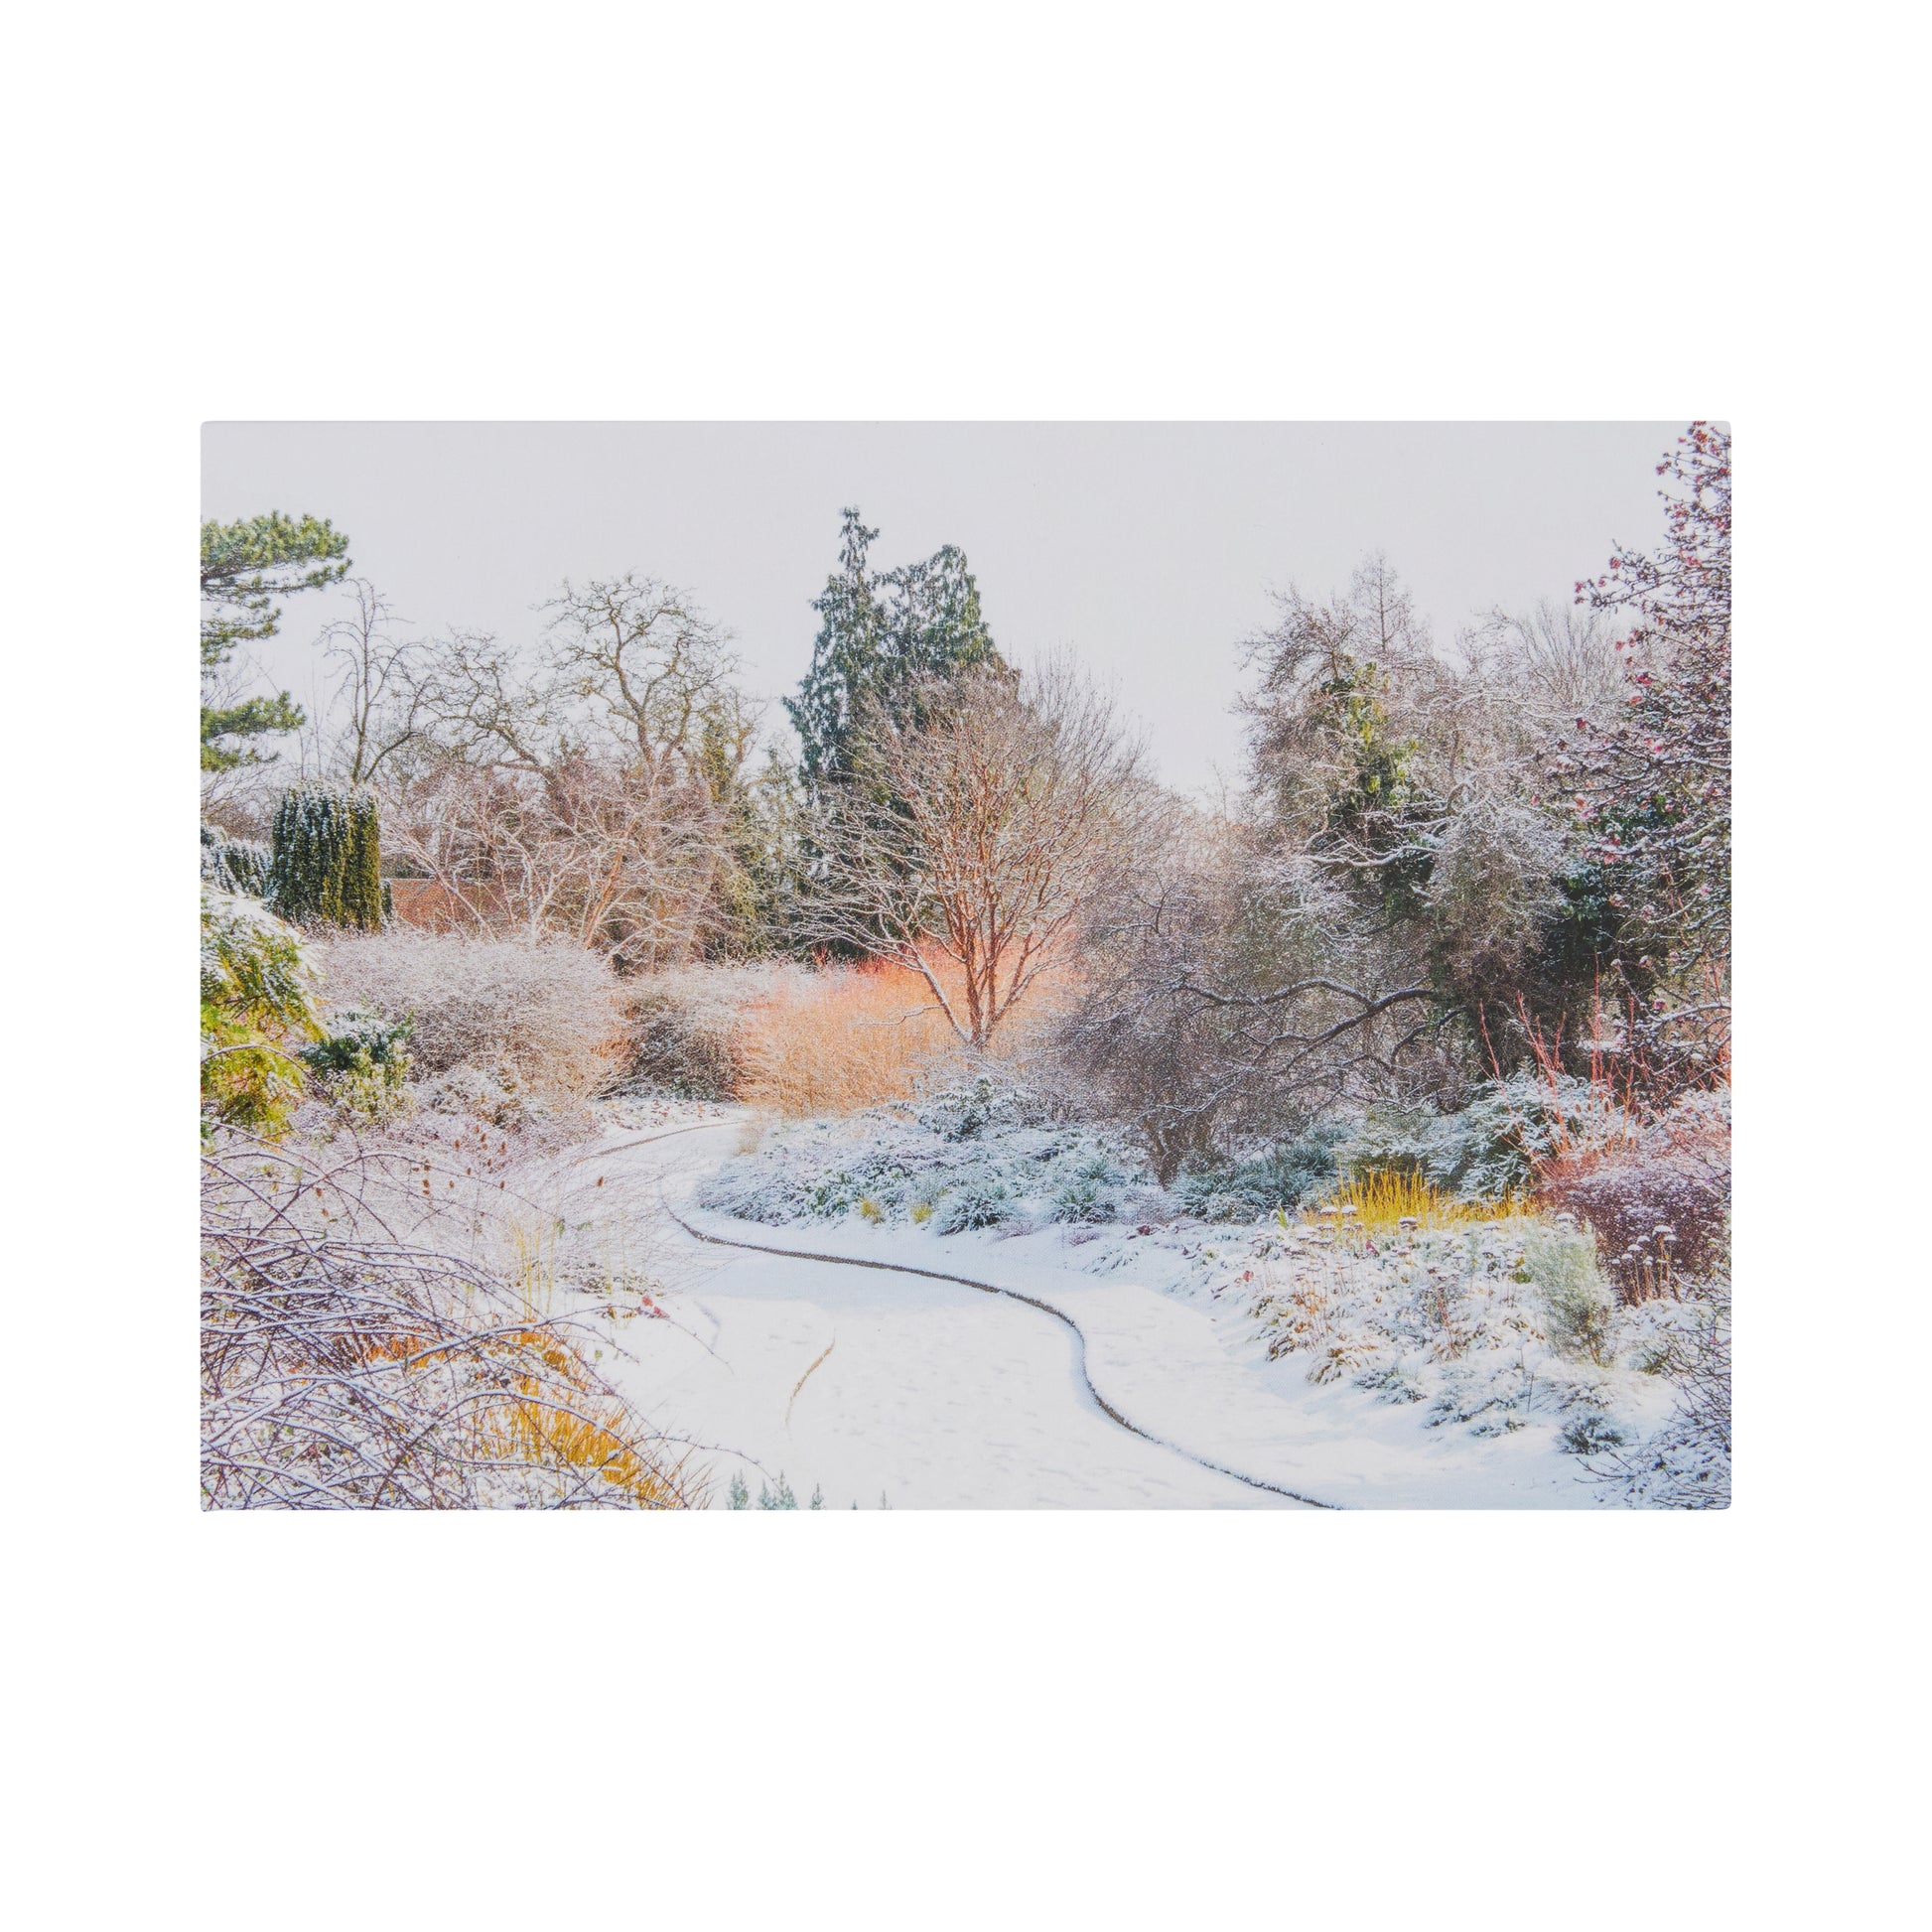 Winter Garden scene with snowy path, shrubs and trees. Photograph taken in Cambridge University Botanic Garden.